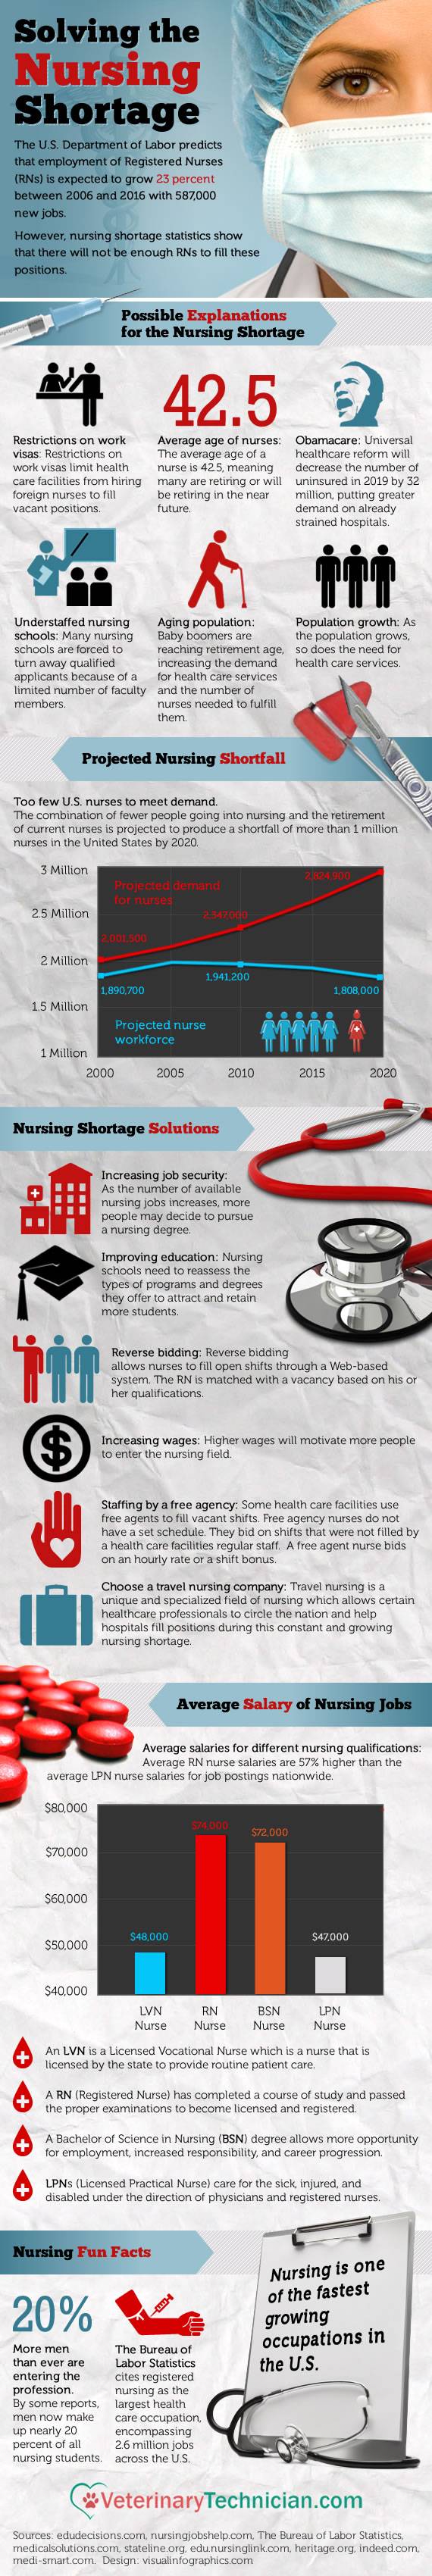 Solving the Nursing Shortage Crisis